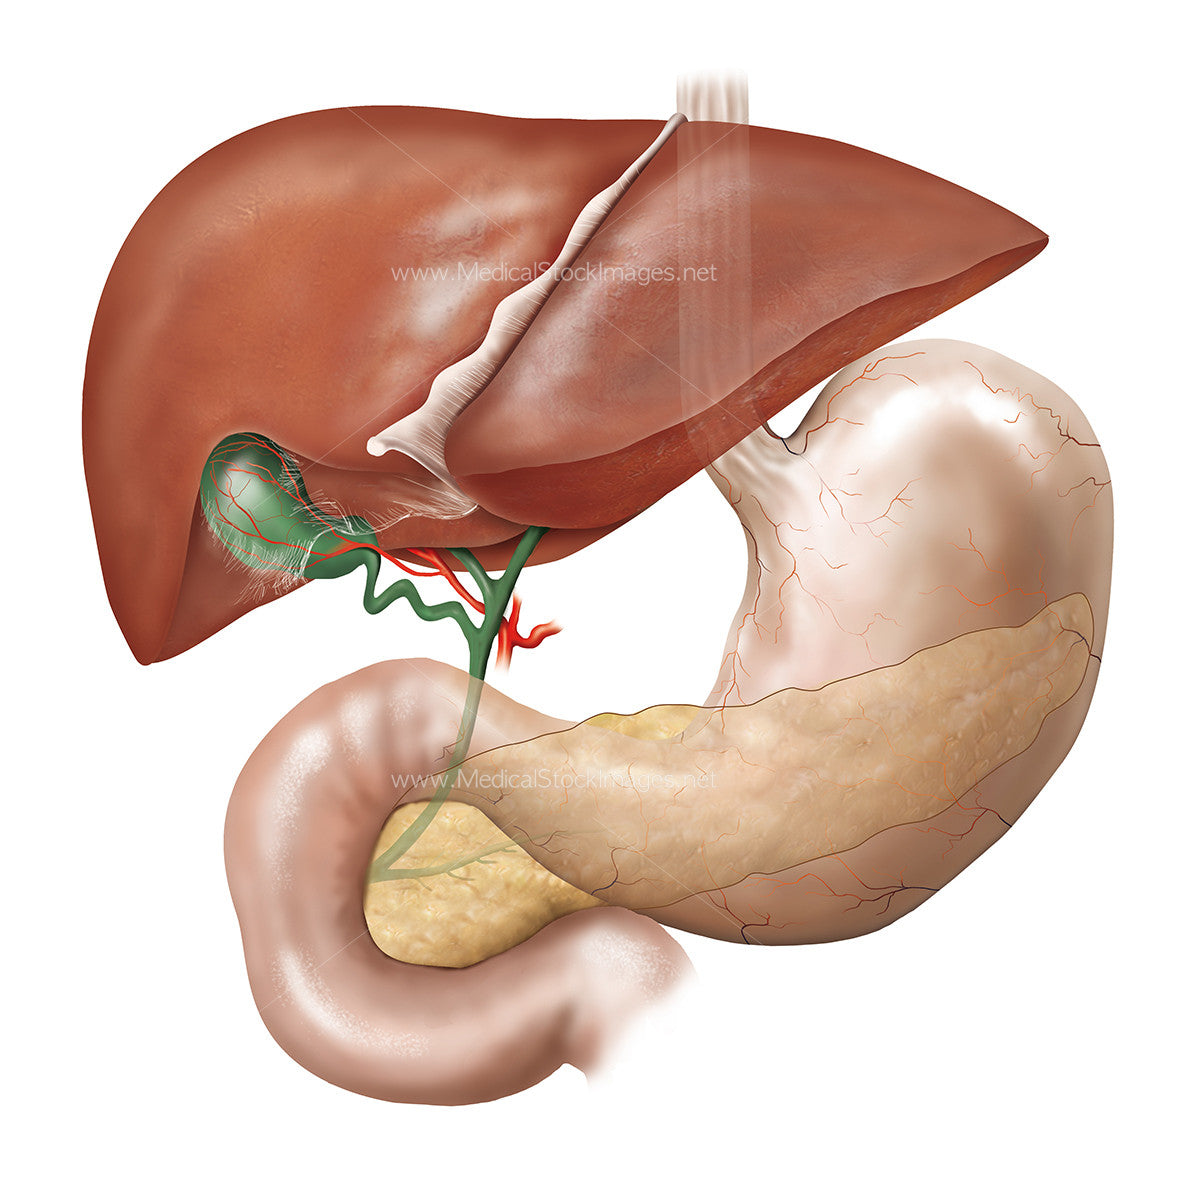 Anatomy of the Gallbladder with Surrounding Anatomy – Medical Stock